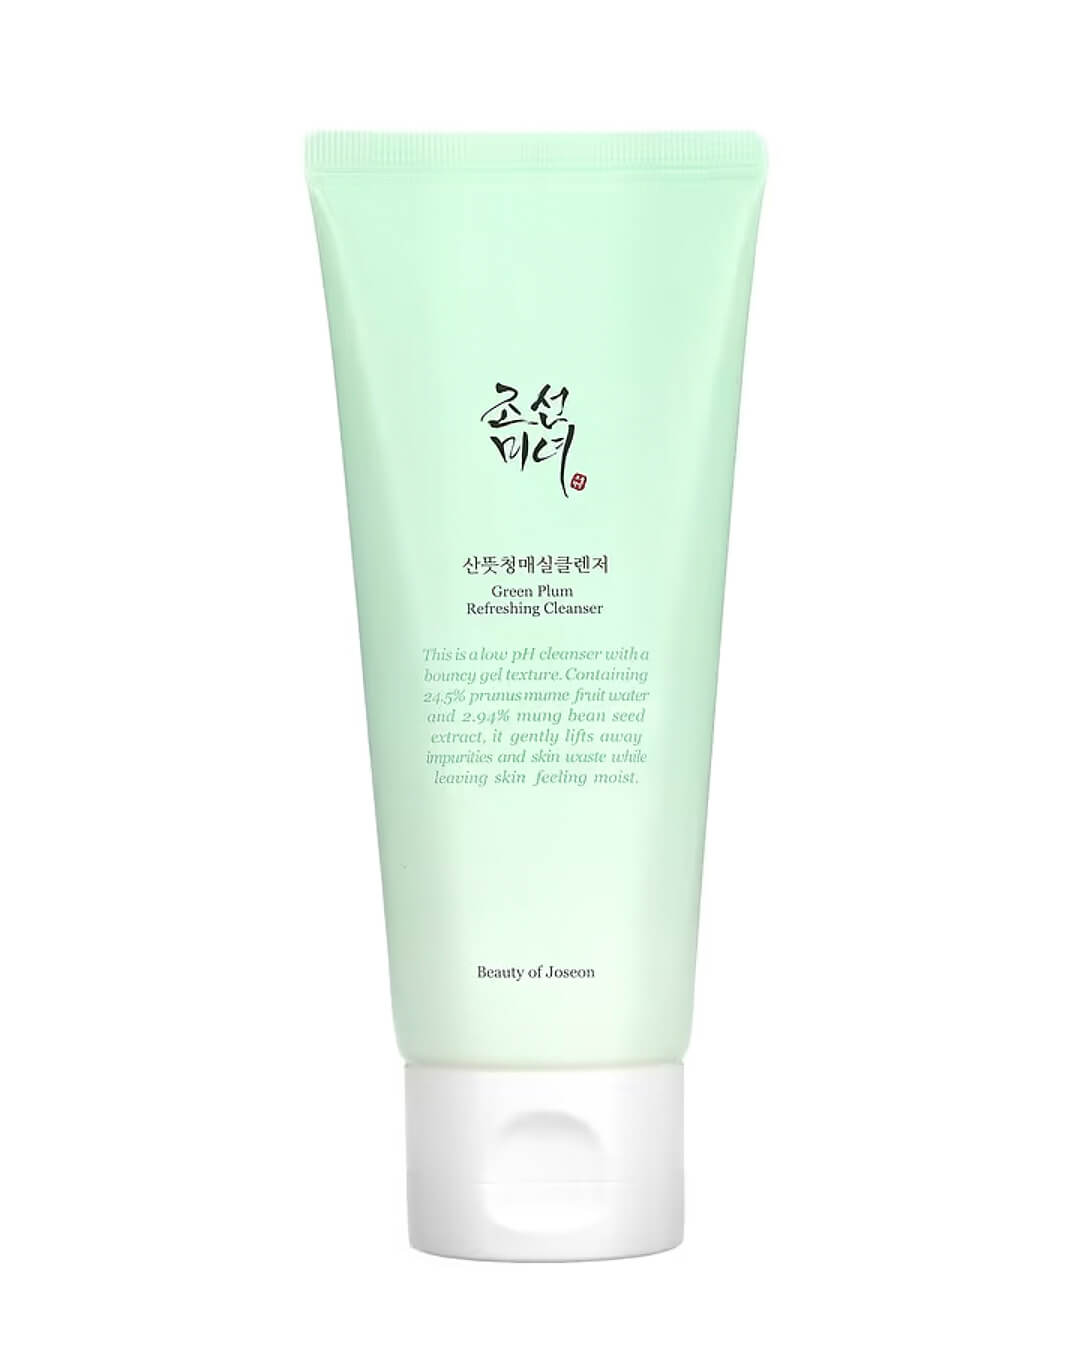 Ohlolly Korean Skincare Beauty of Joseon Green Plum Refreshing Cleanser